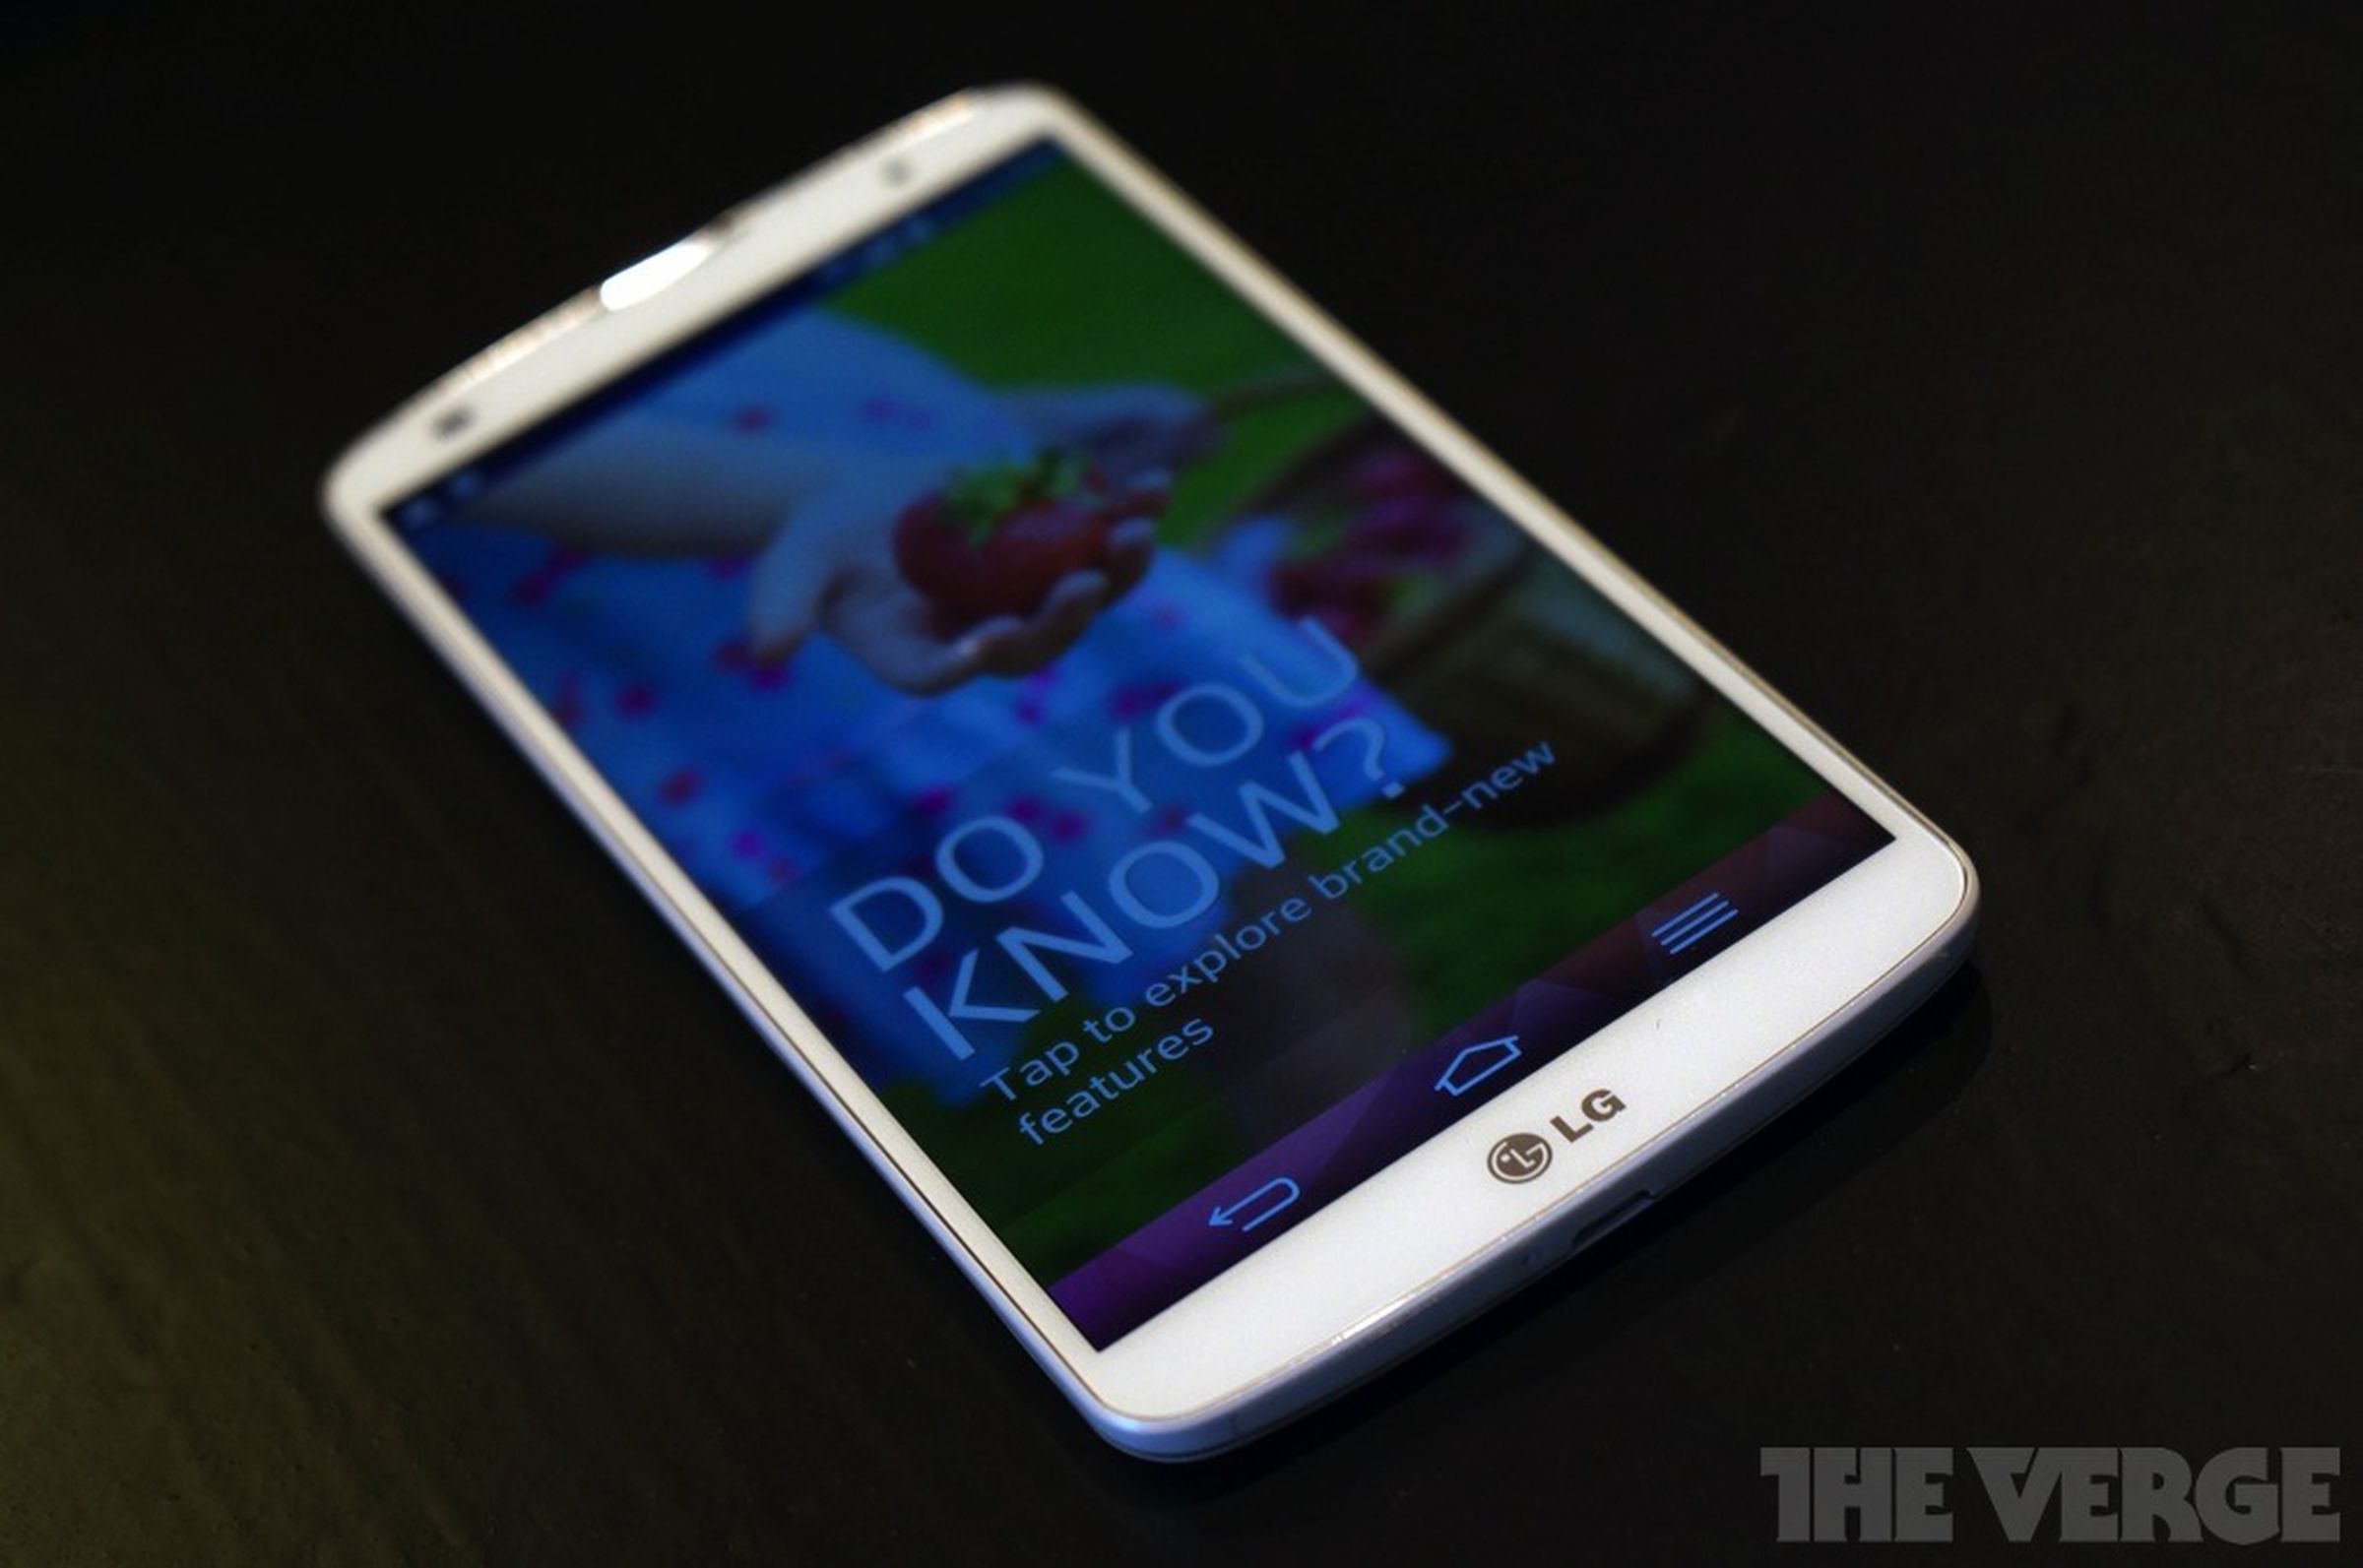 LG G Pro 2 hands-on photos